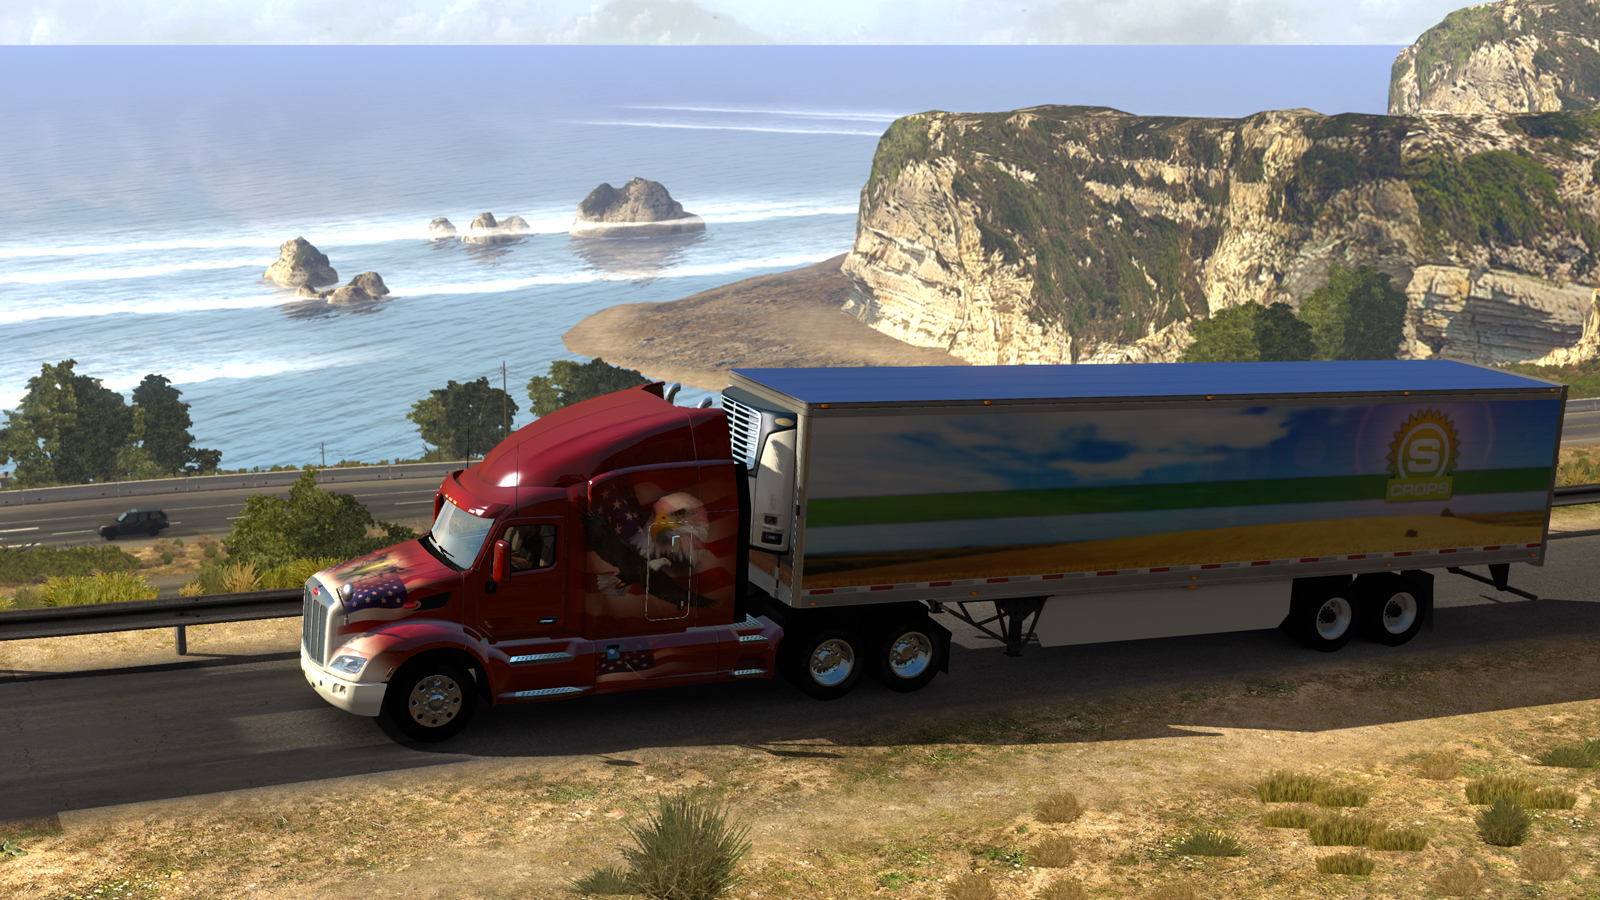 American Truck Simulator reveal at E3